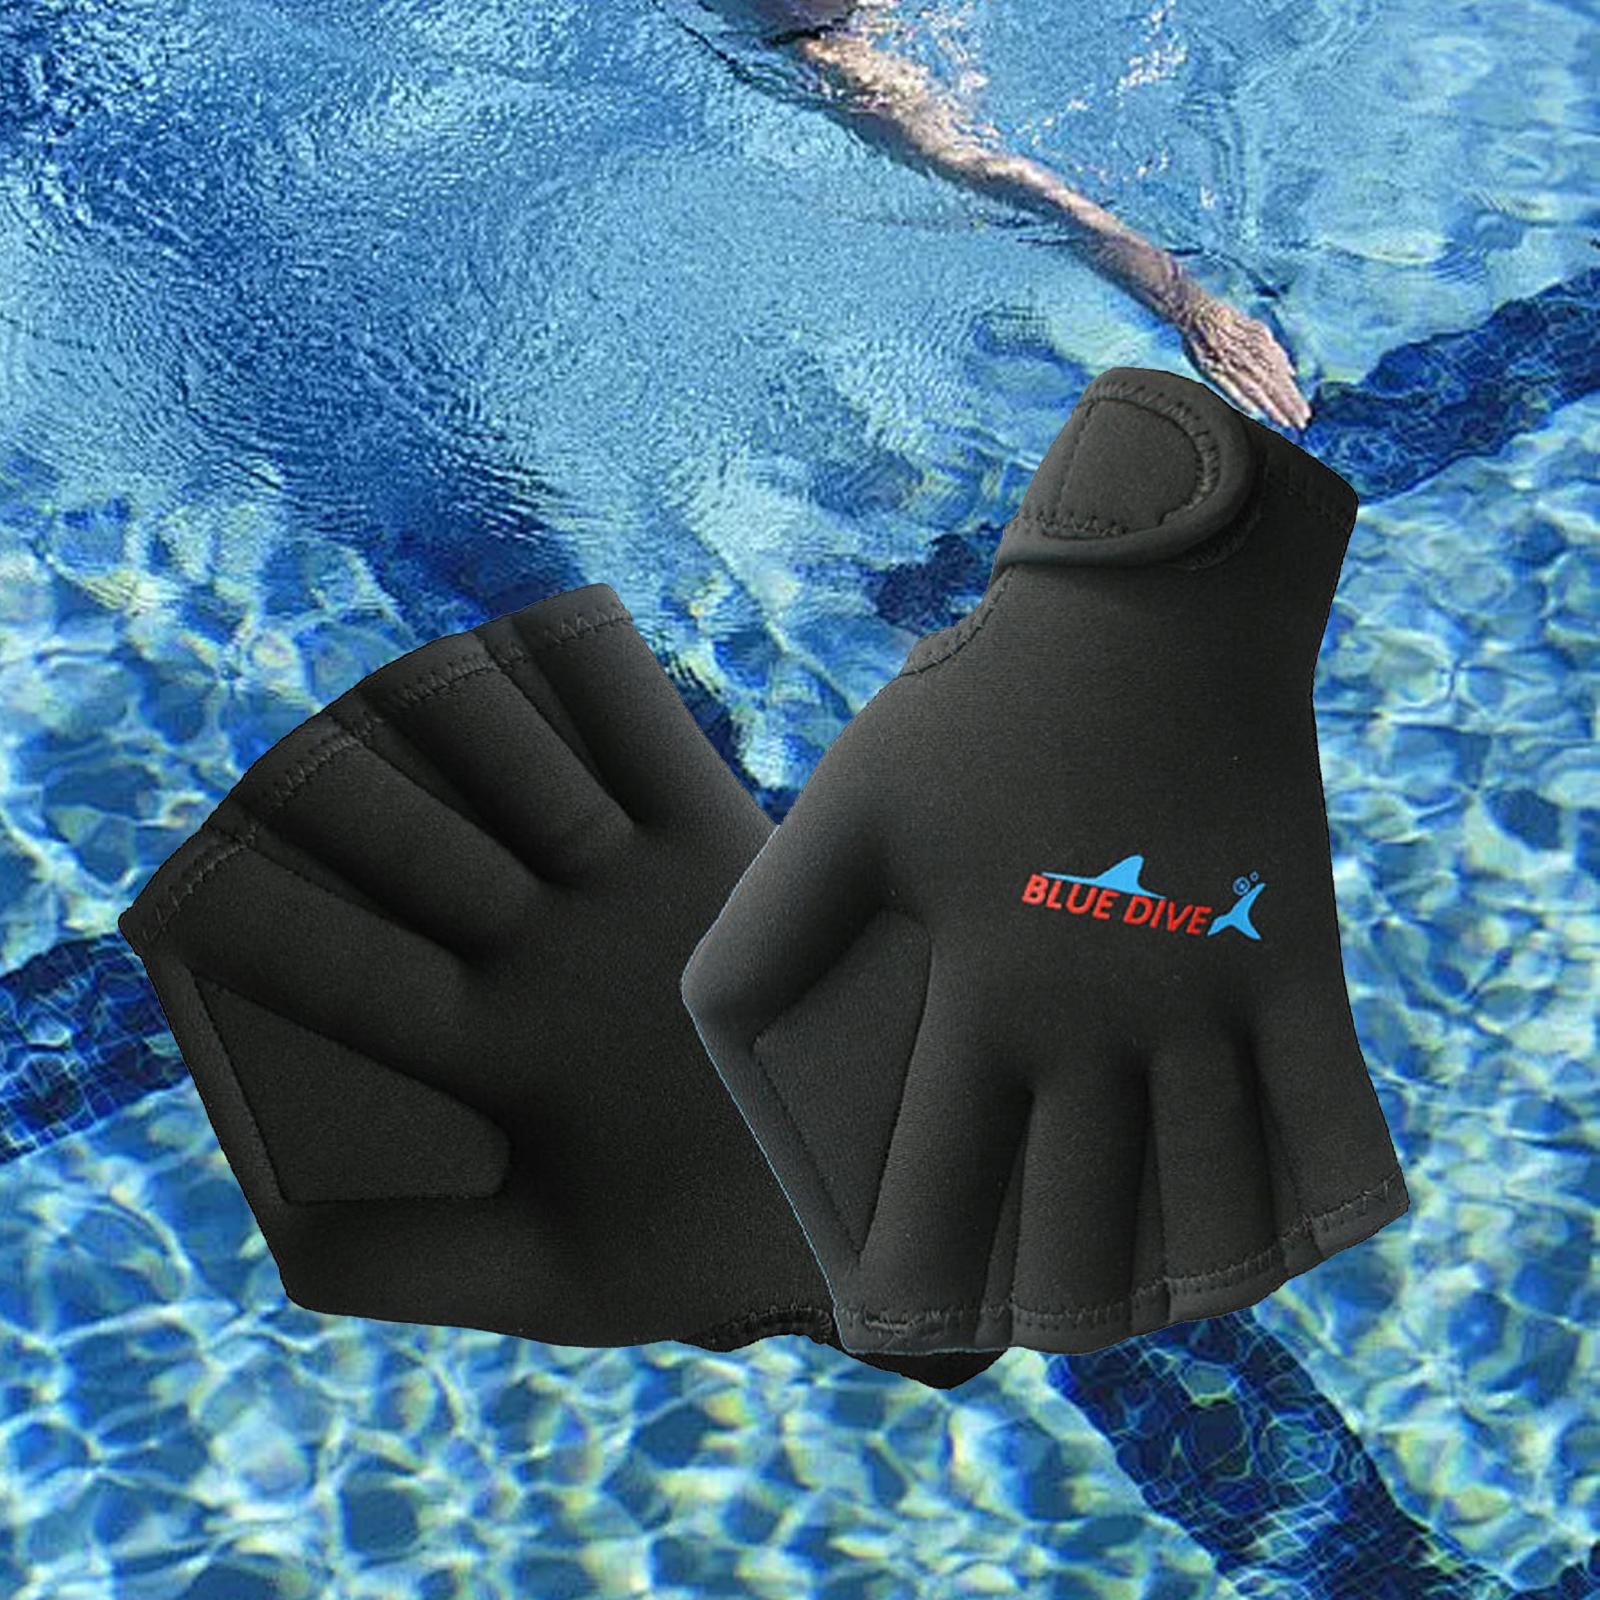 Swimming Gloves Webbed Swim Gloves for Water Aerobics Aquatic Fitness Adults Black